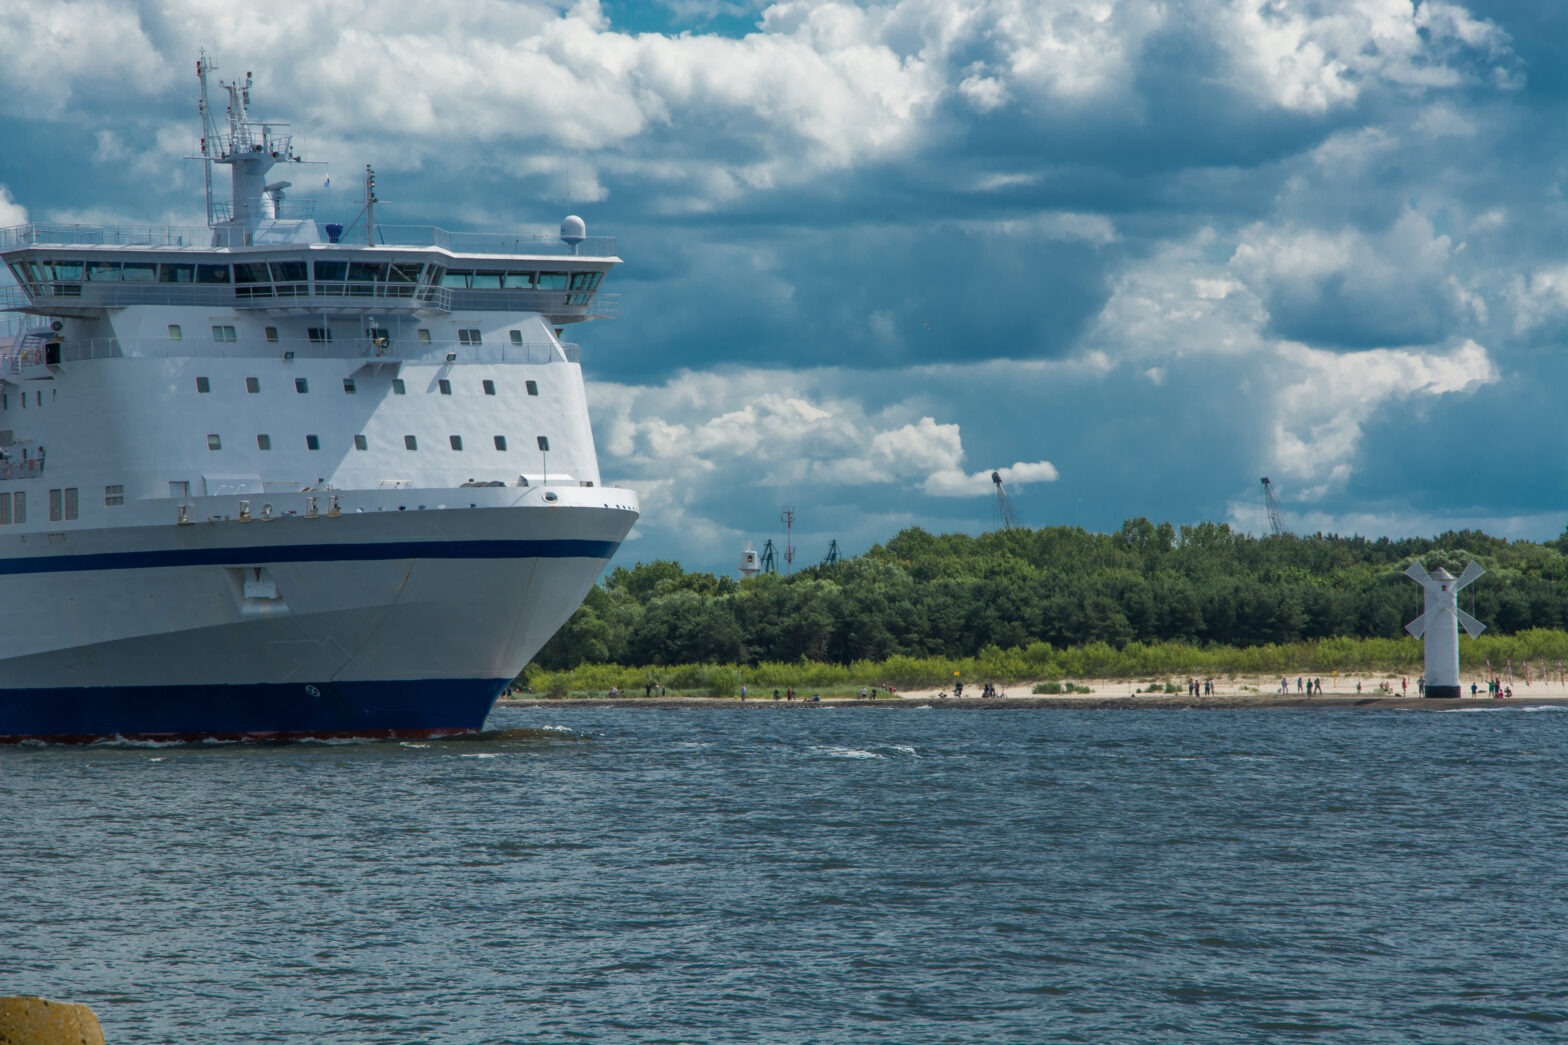 Promy24 ferry PolandSWEDEN